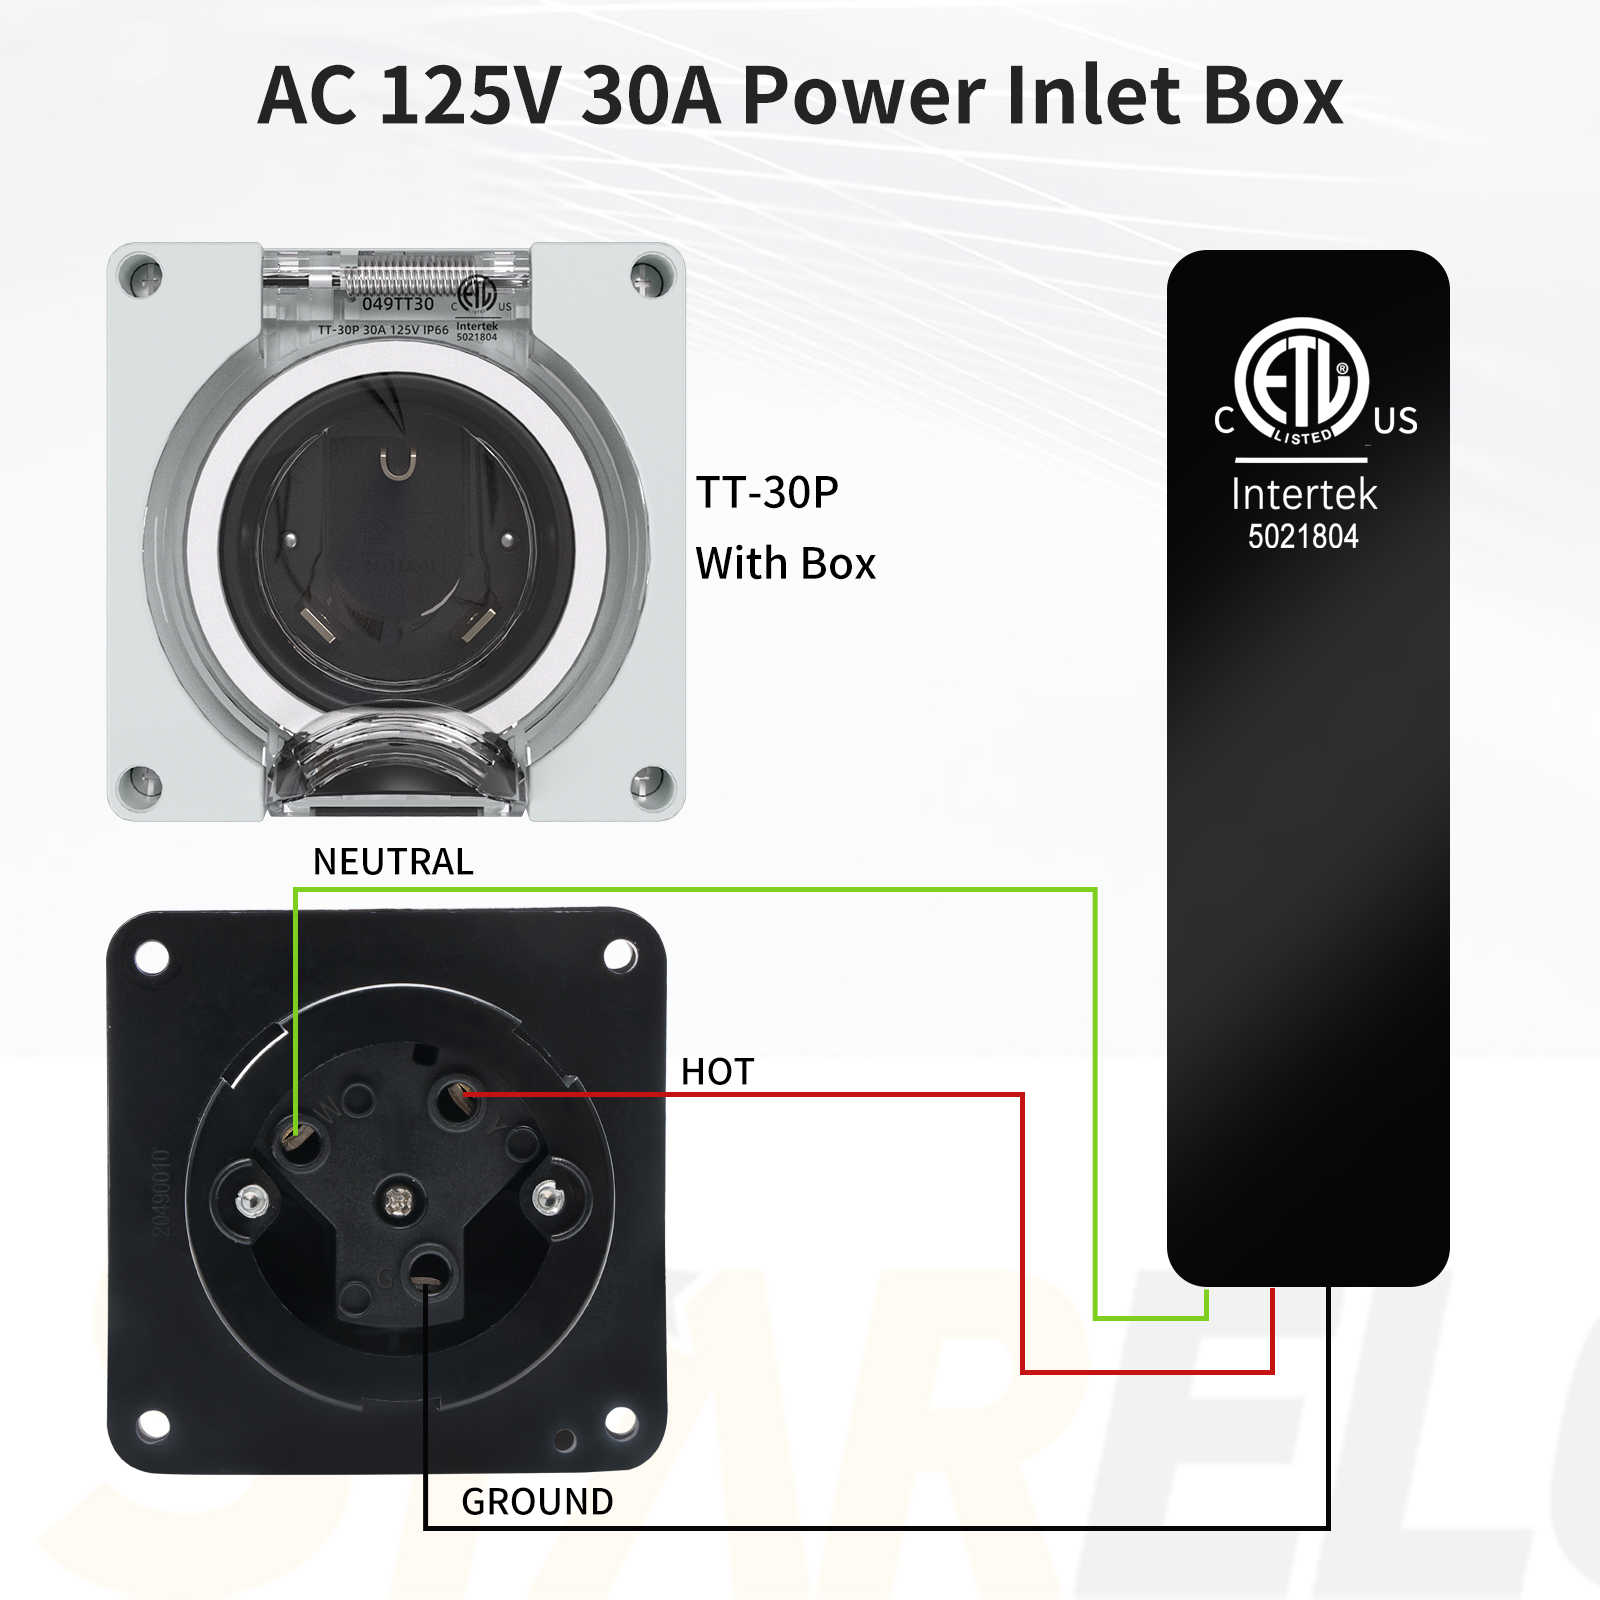 NEMA TT-30P 125v 30Amp Power Inlet Box wiring diagram